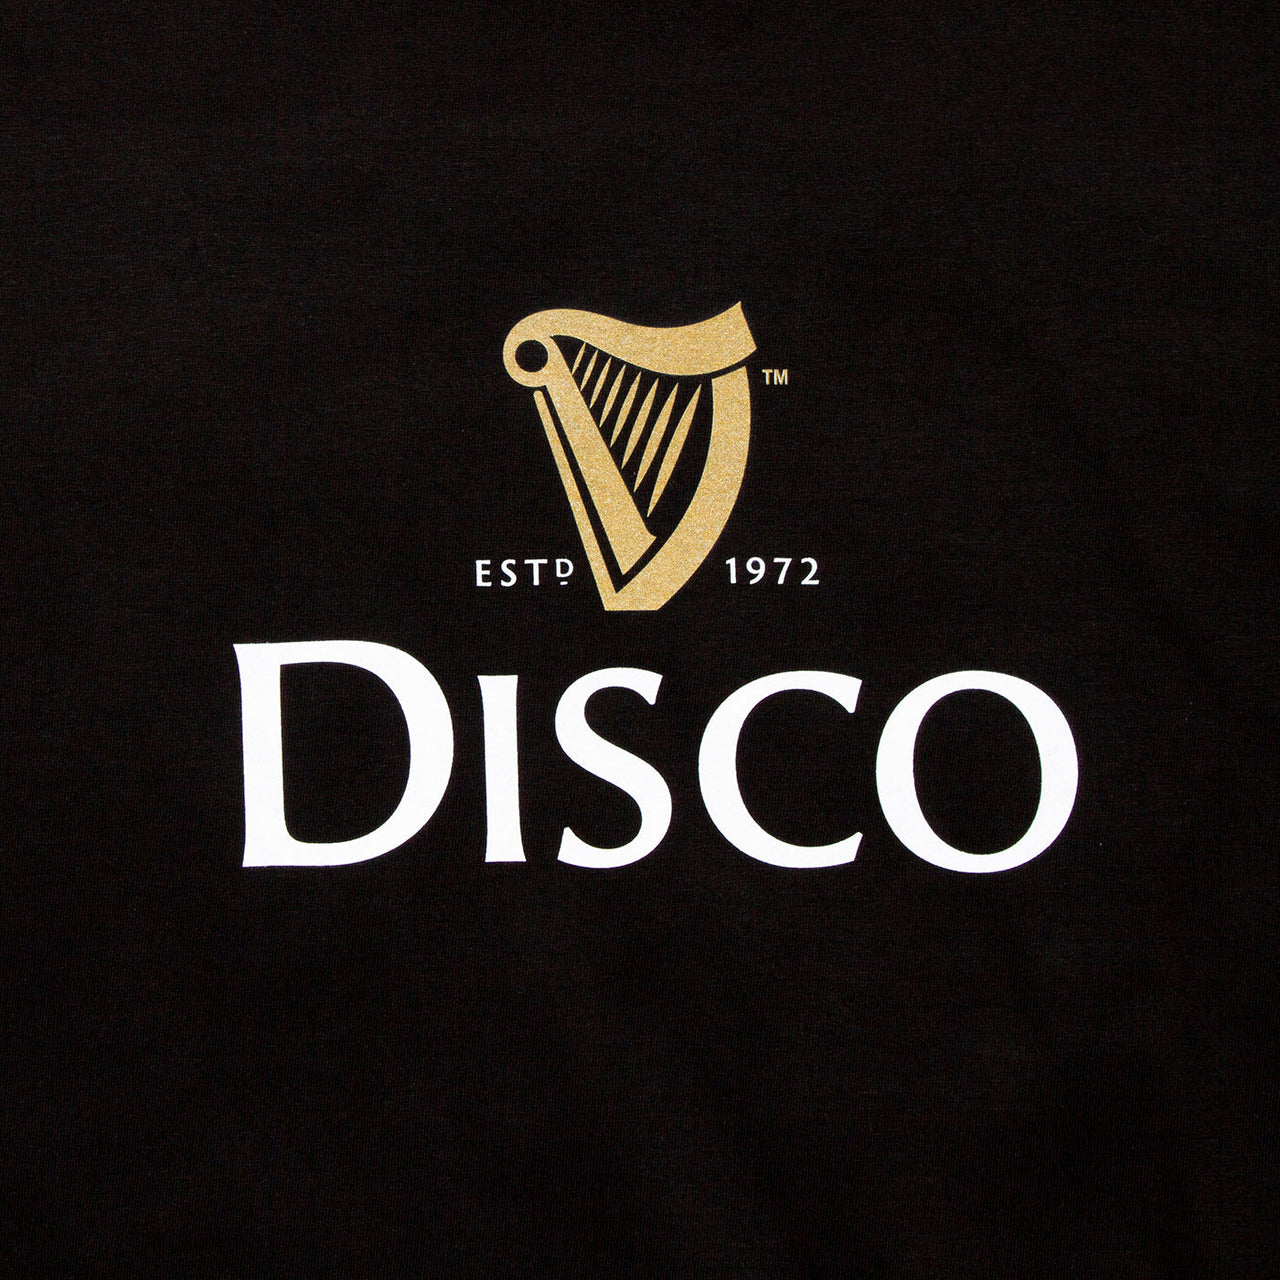 Crest Disco Harp - Tshirt - Black or Green